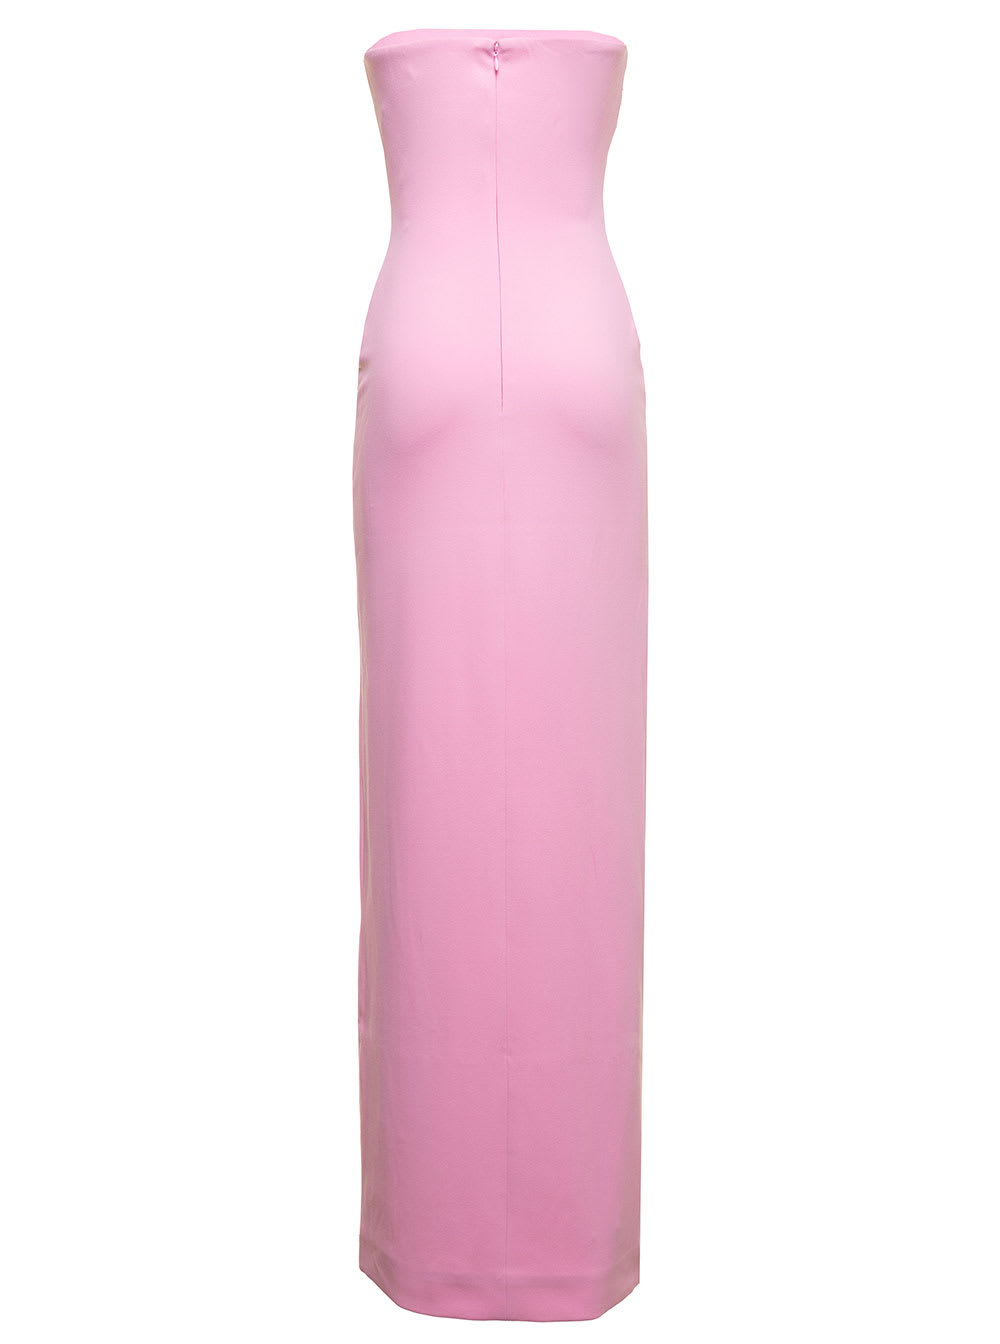 Bysha Pink Crepe Long Dress Solace London Woman